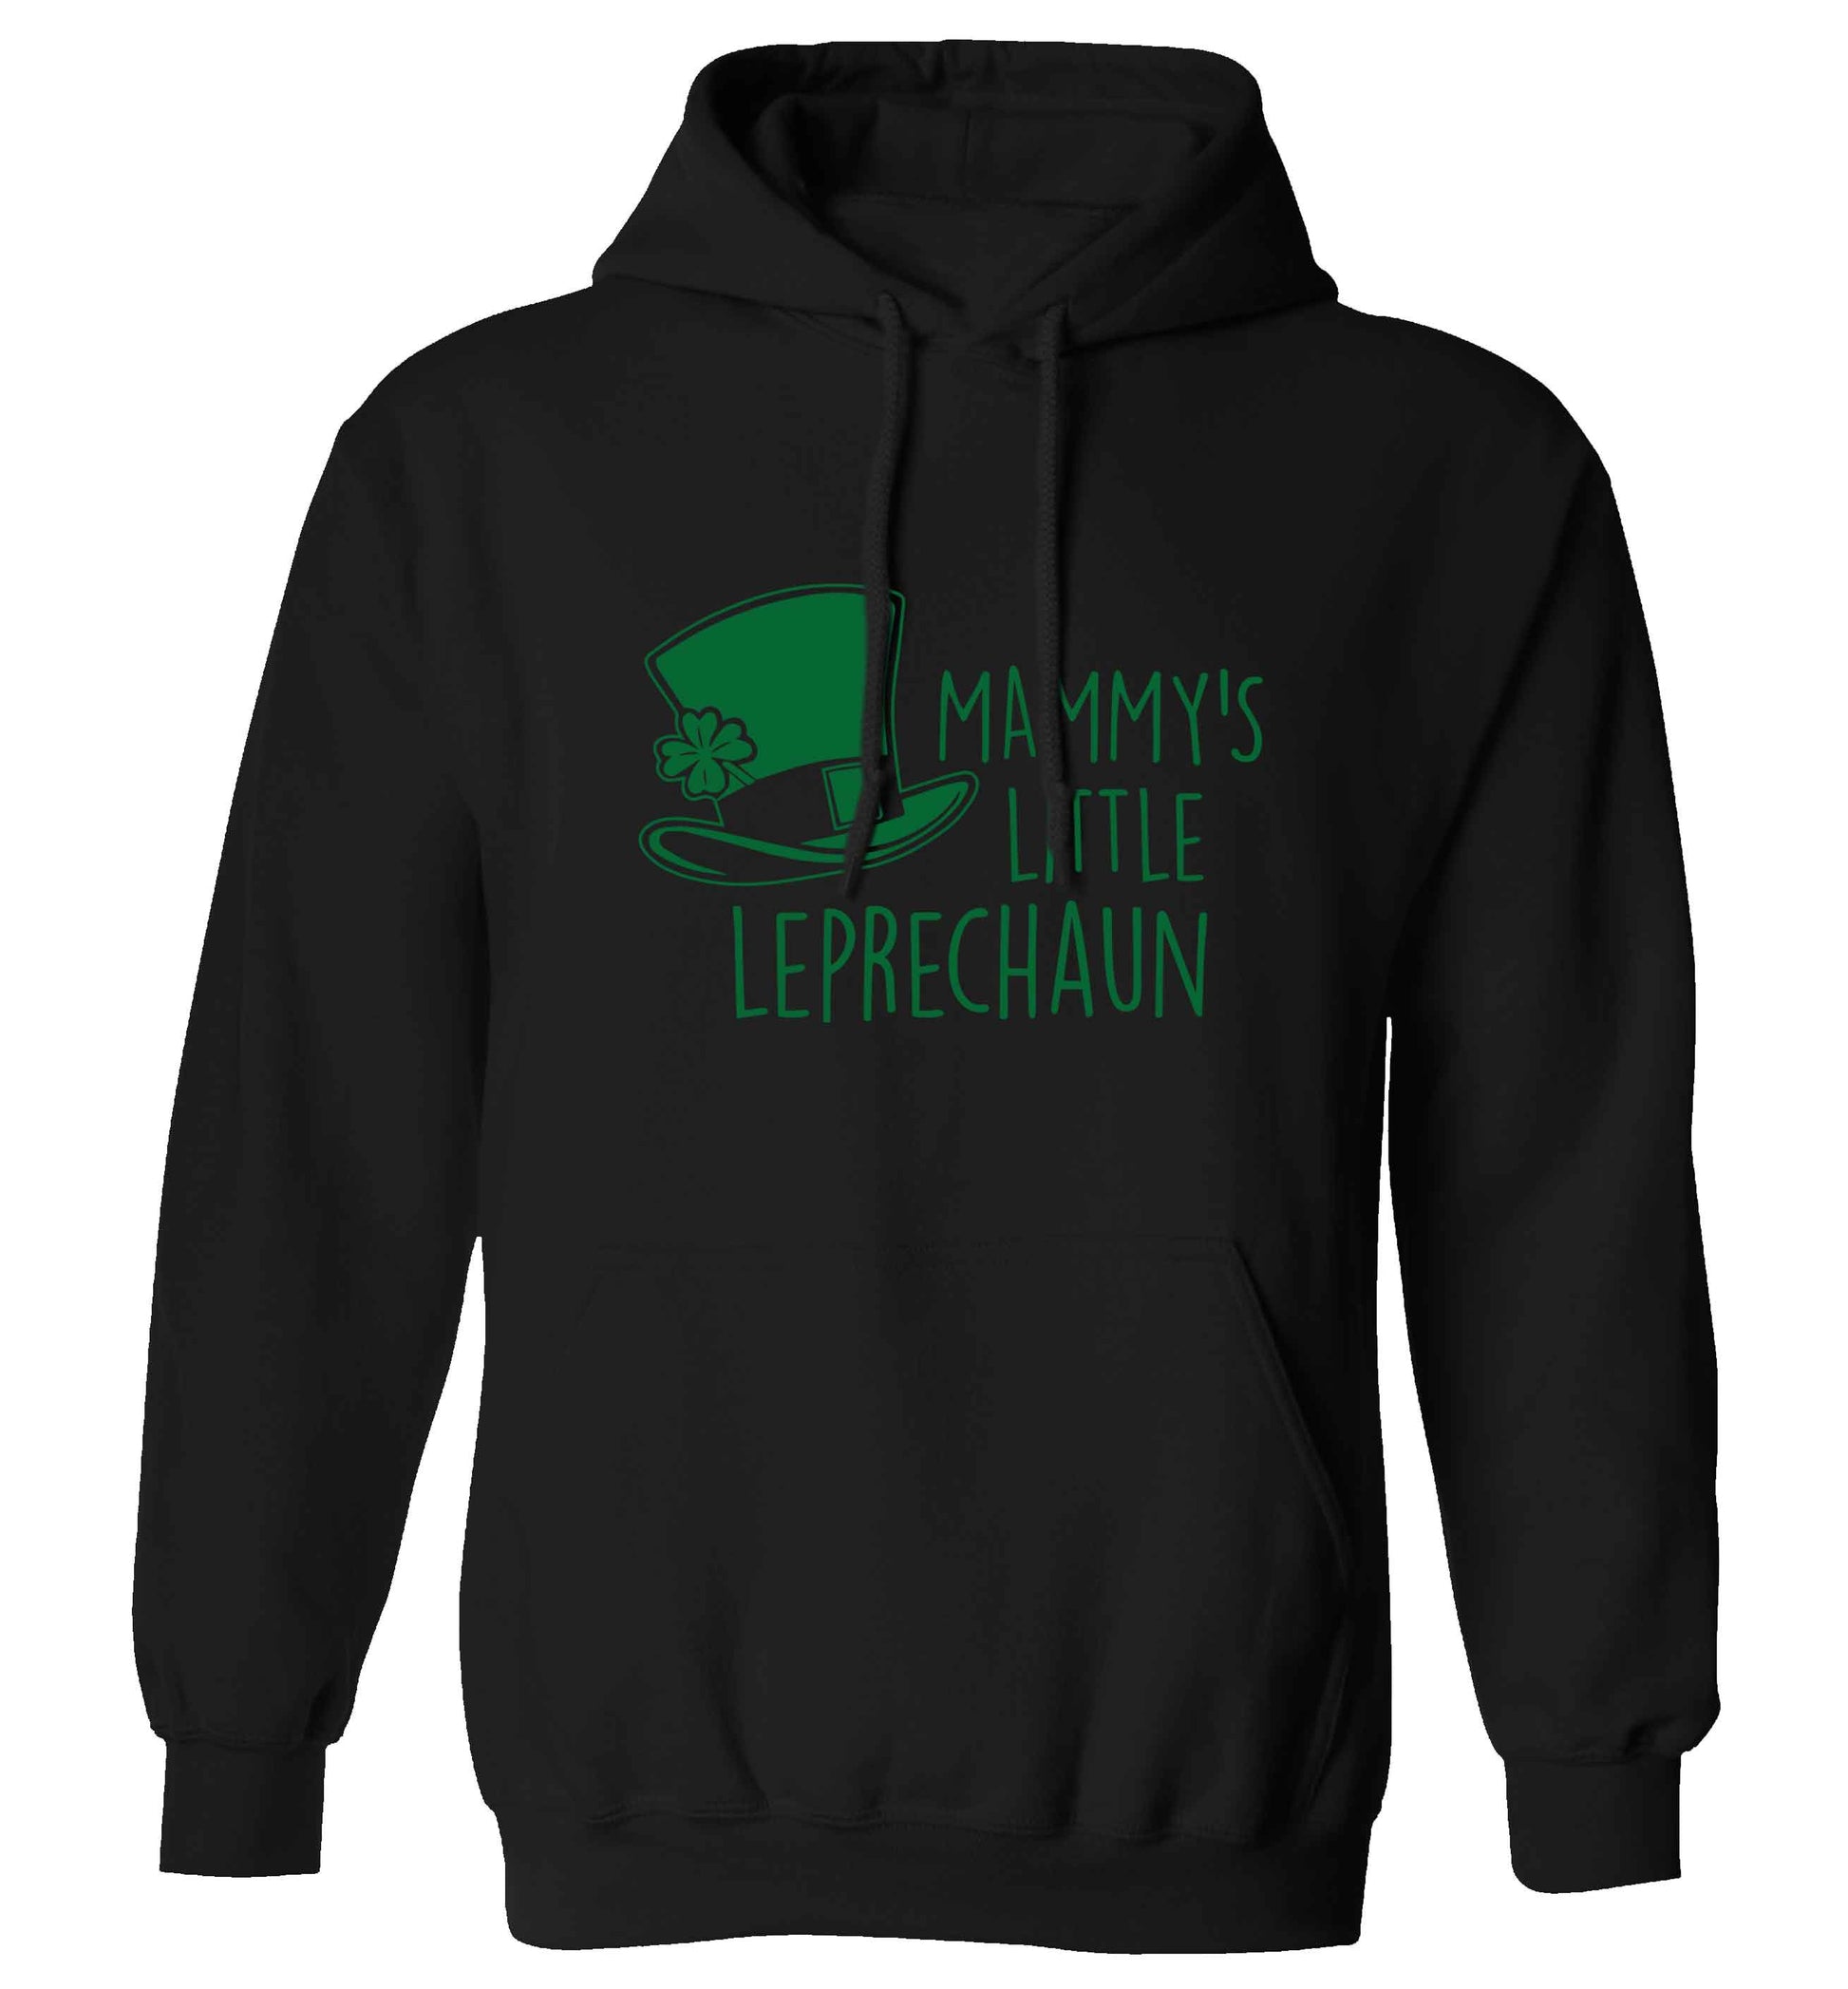 Mammy's little leprechaun adults unisex black hoodie 2XL